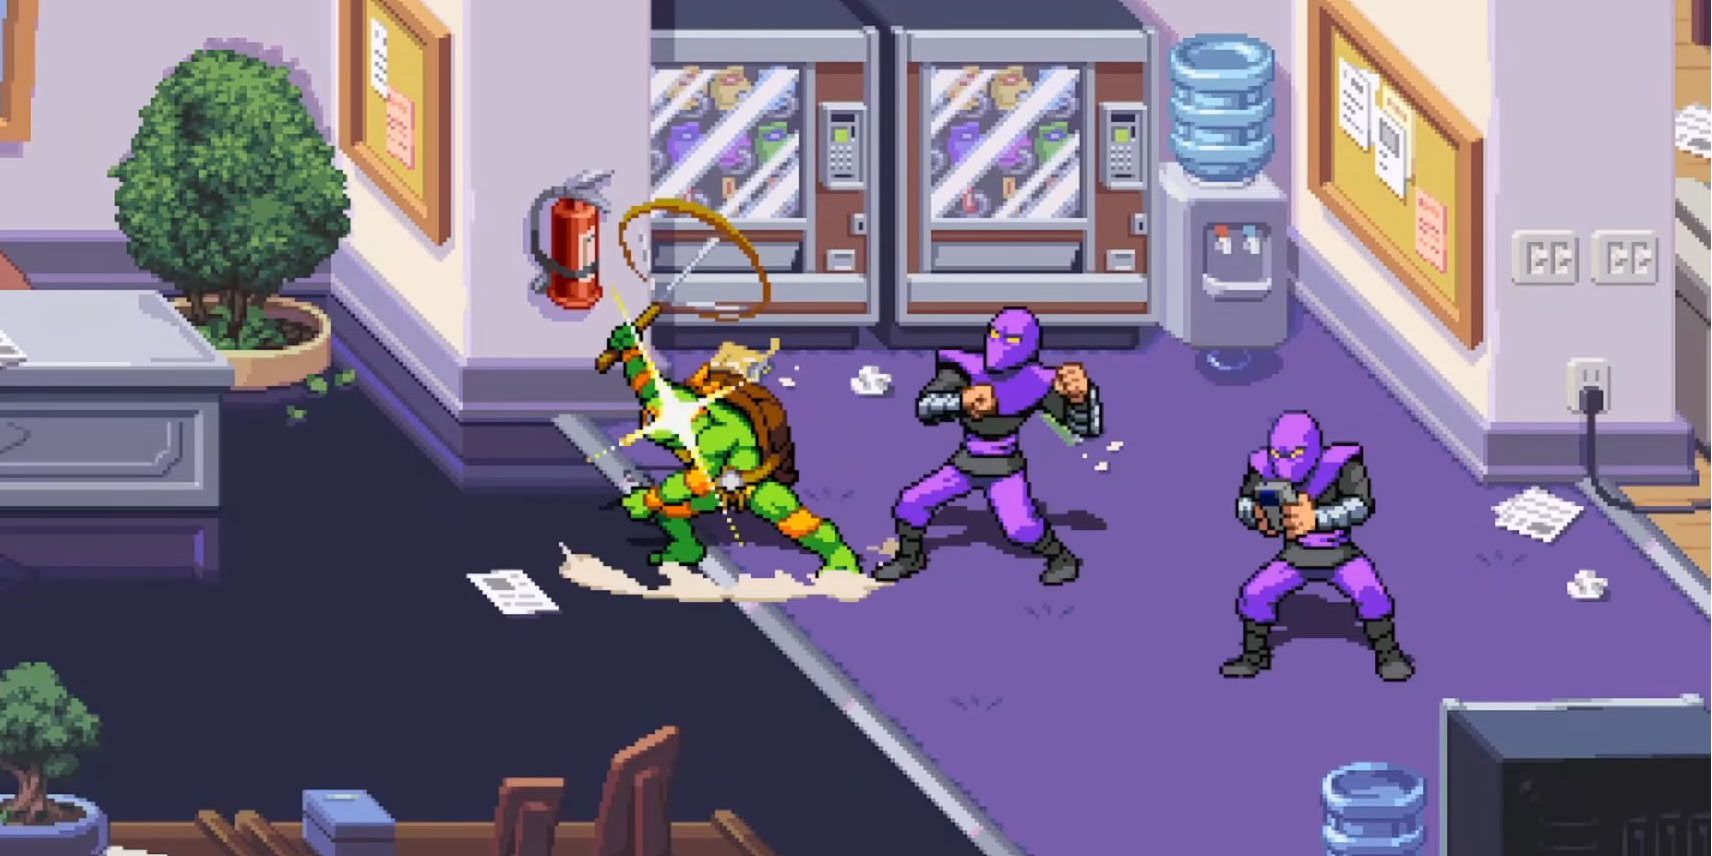 A screenshot showing Michaelangelo performing a charged attack in Teenage Mutant Ninja Turtles: Shredder's Revenge